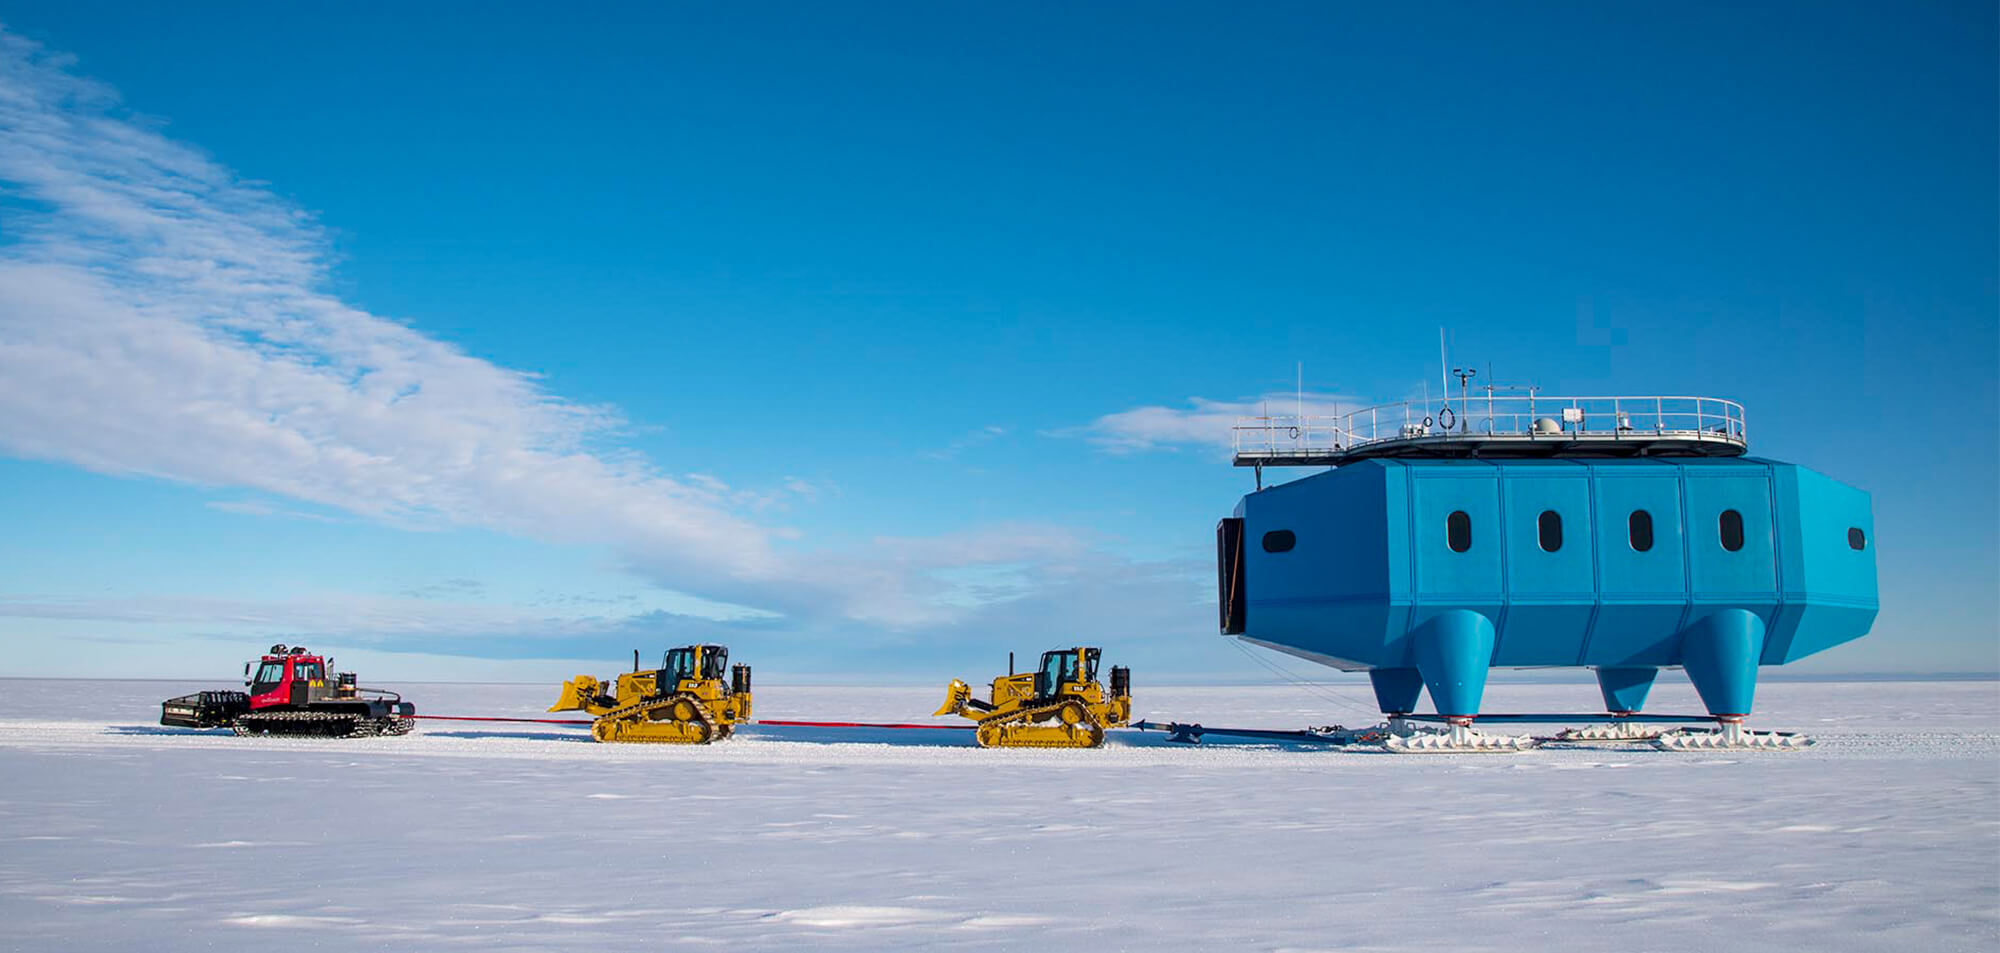 Antarctica – Ice Station Rescue